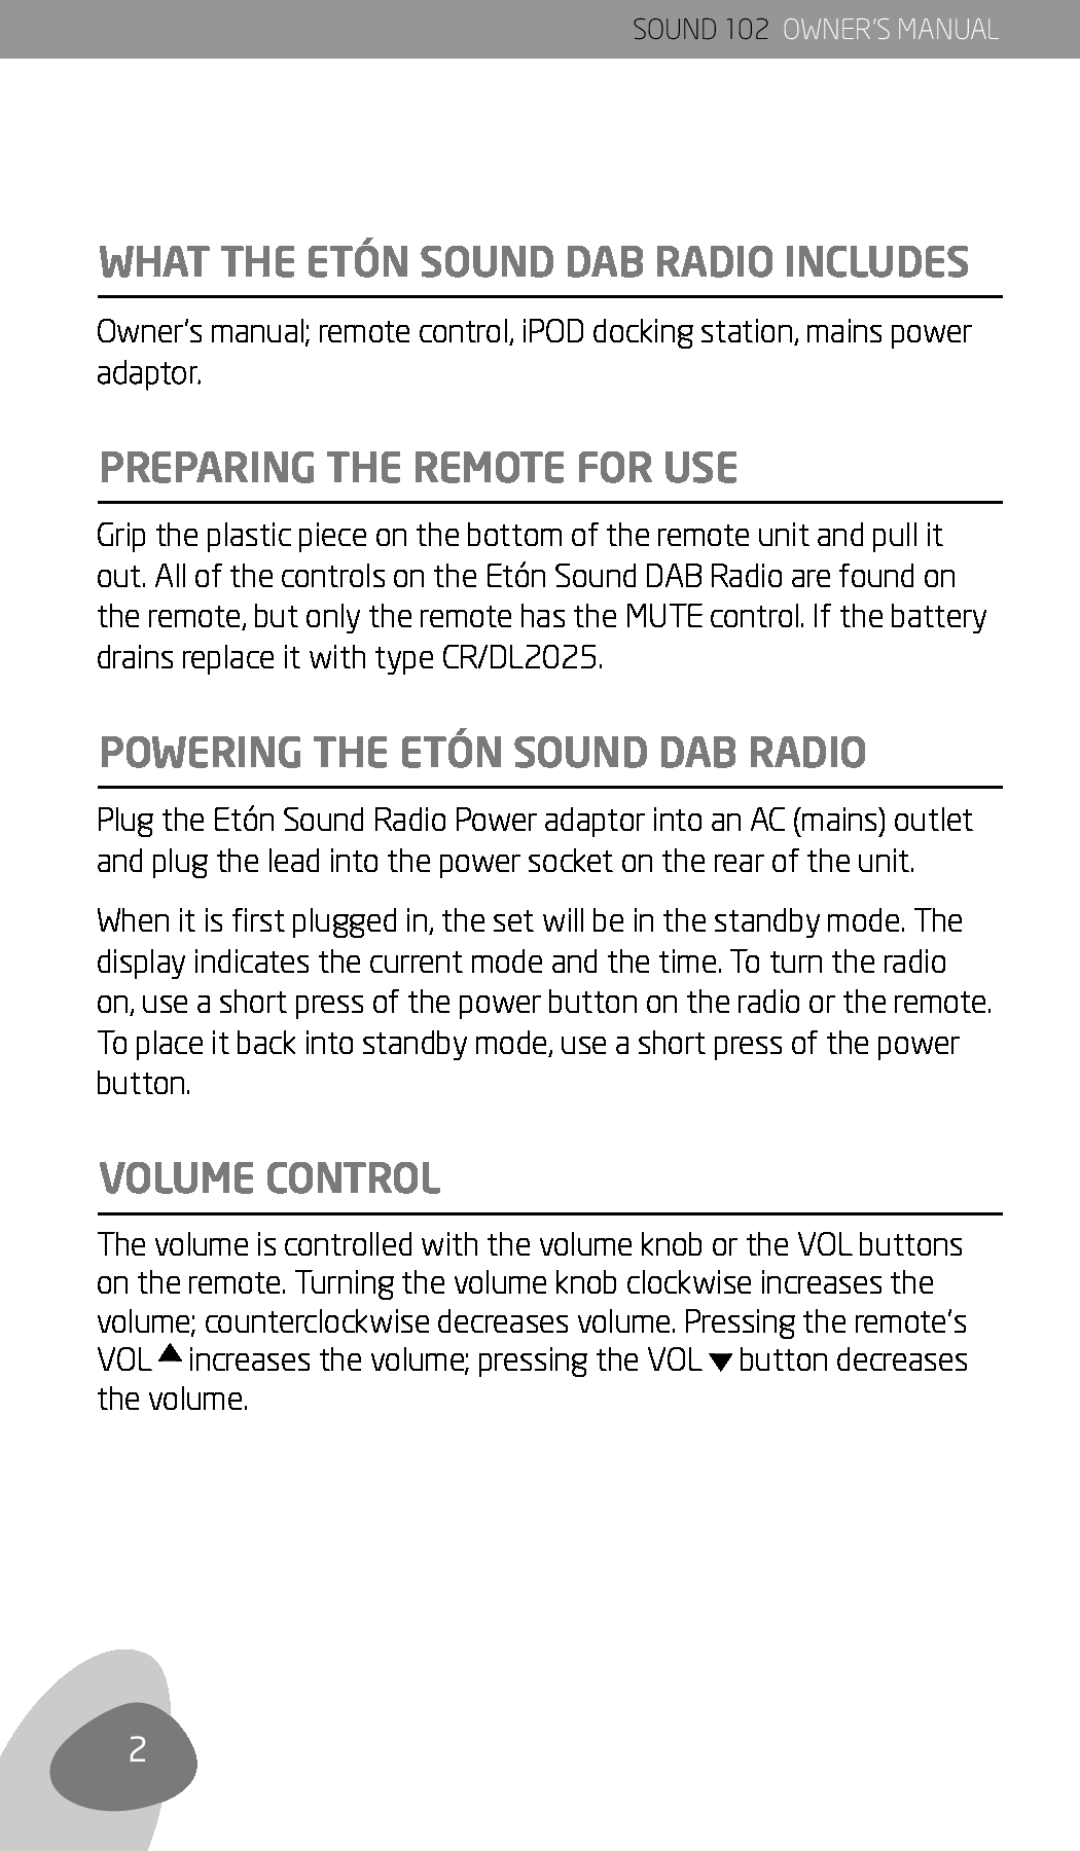 Eton 102 What The Etón Sound Dab Radio Includes, Preparing The Remote For Use, Powering The Etón Sound Dab Radio 